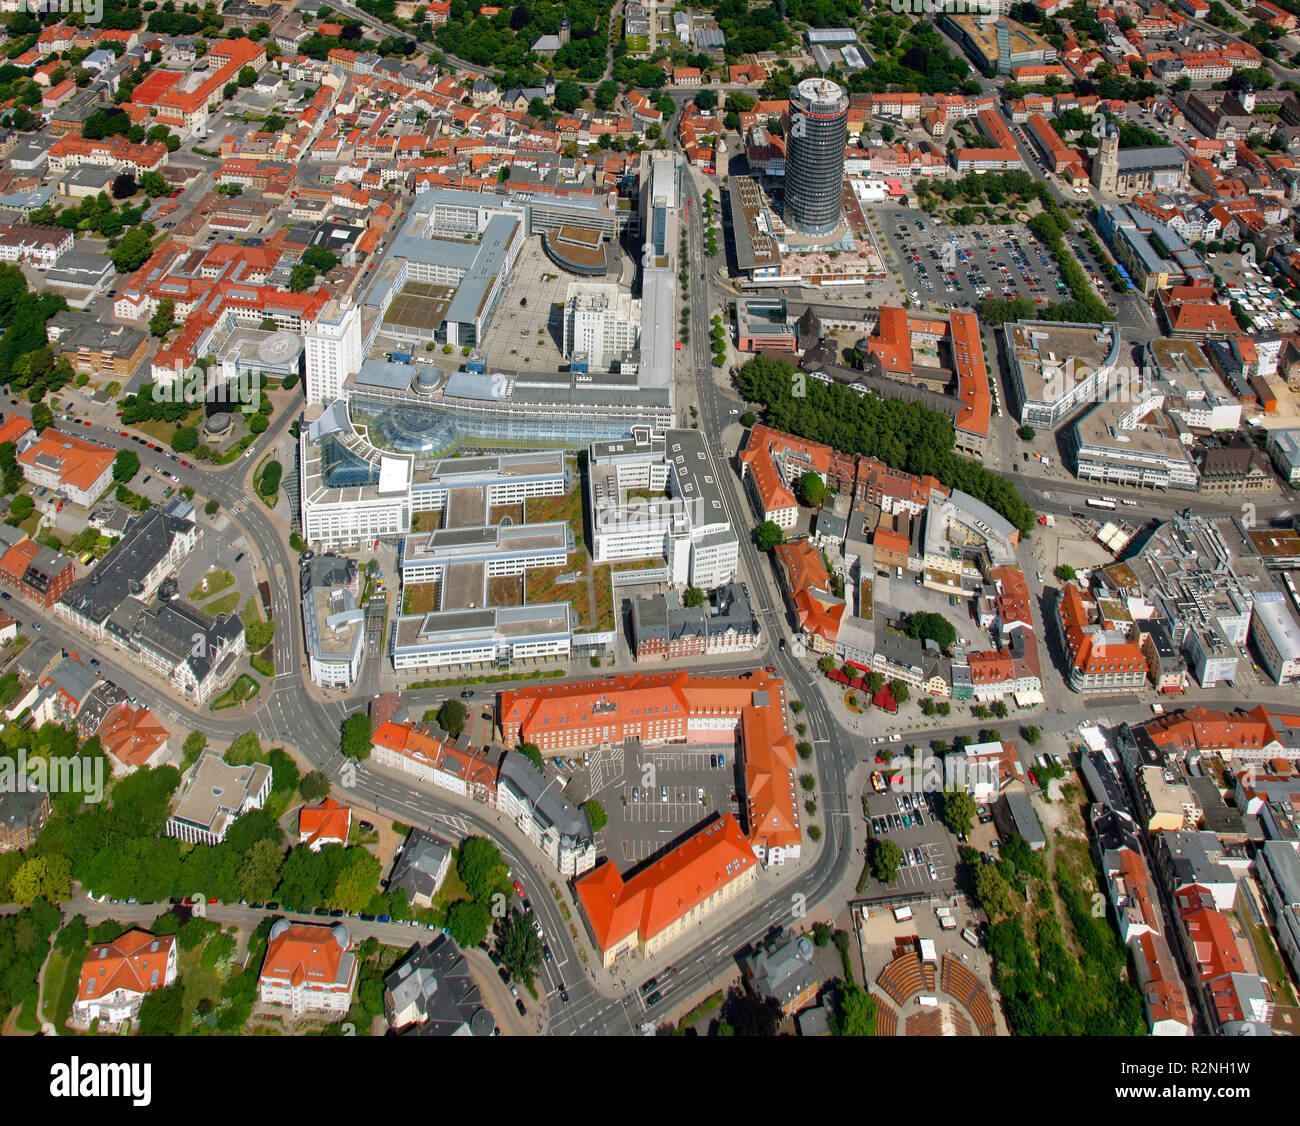 Aerial view, Jentower, Jenoptik, city center, University of Jena, aerial view, Villengang 5, Jena, Thuringia, Germany, Europe, Stock Photo